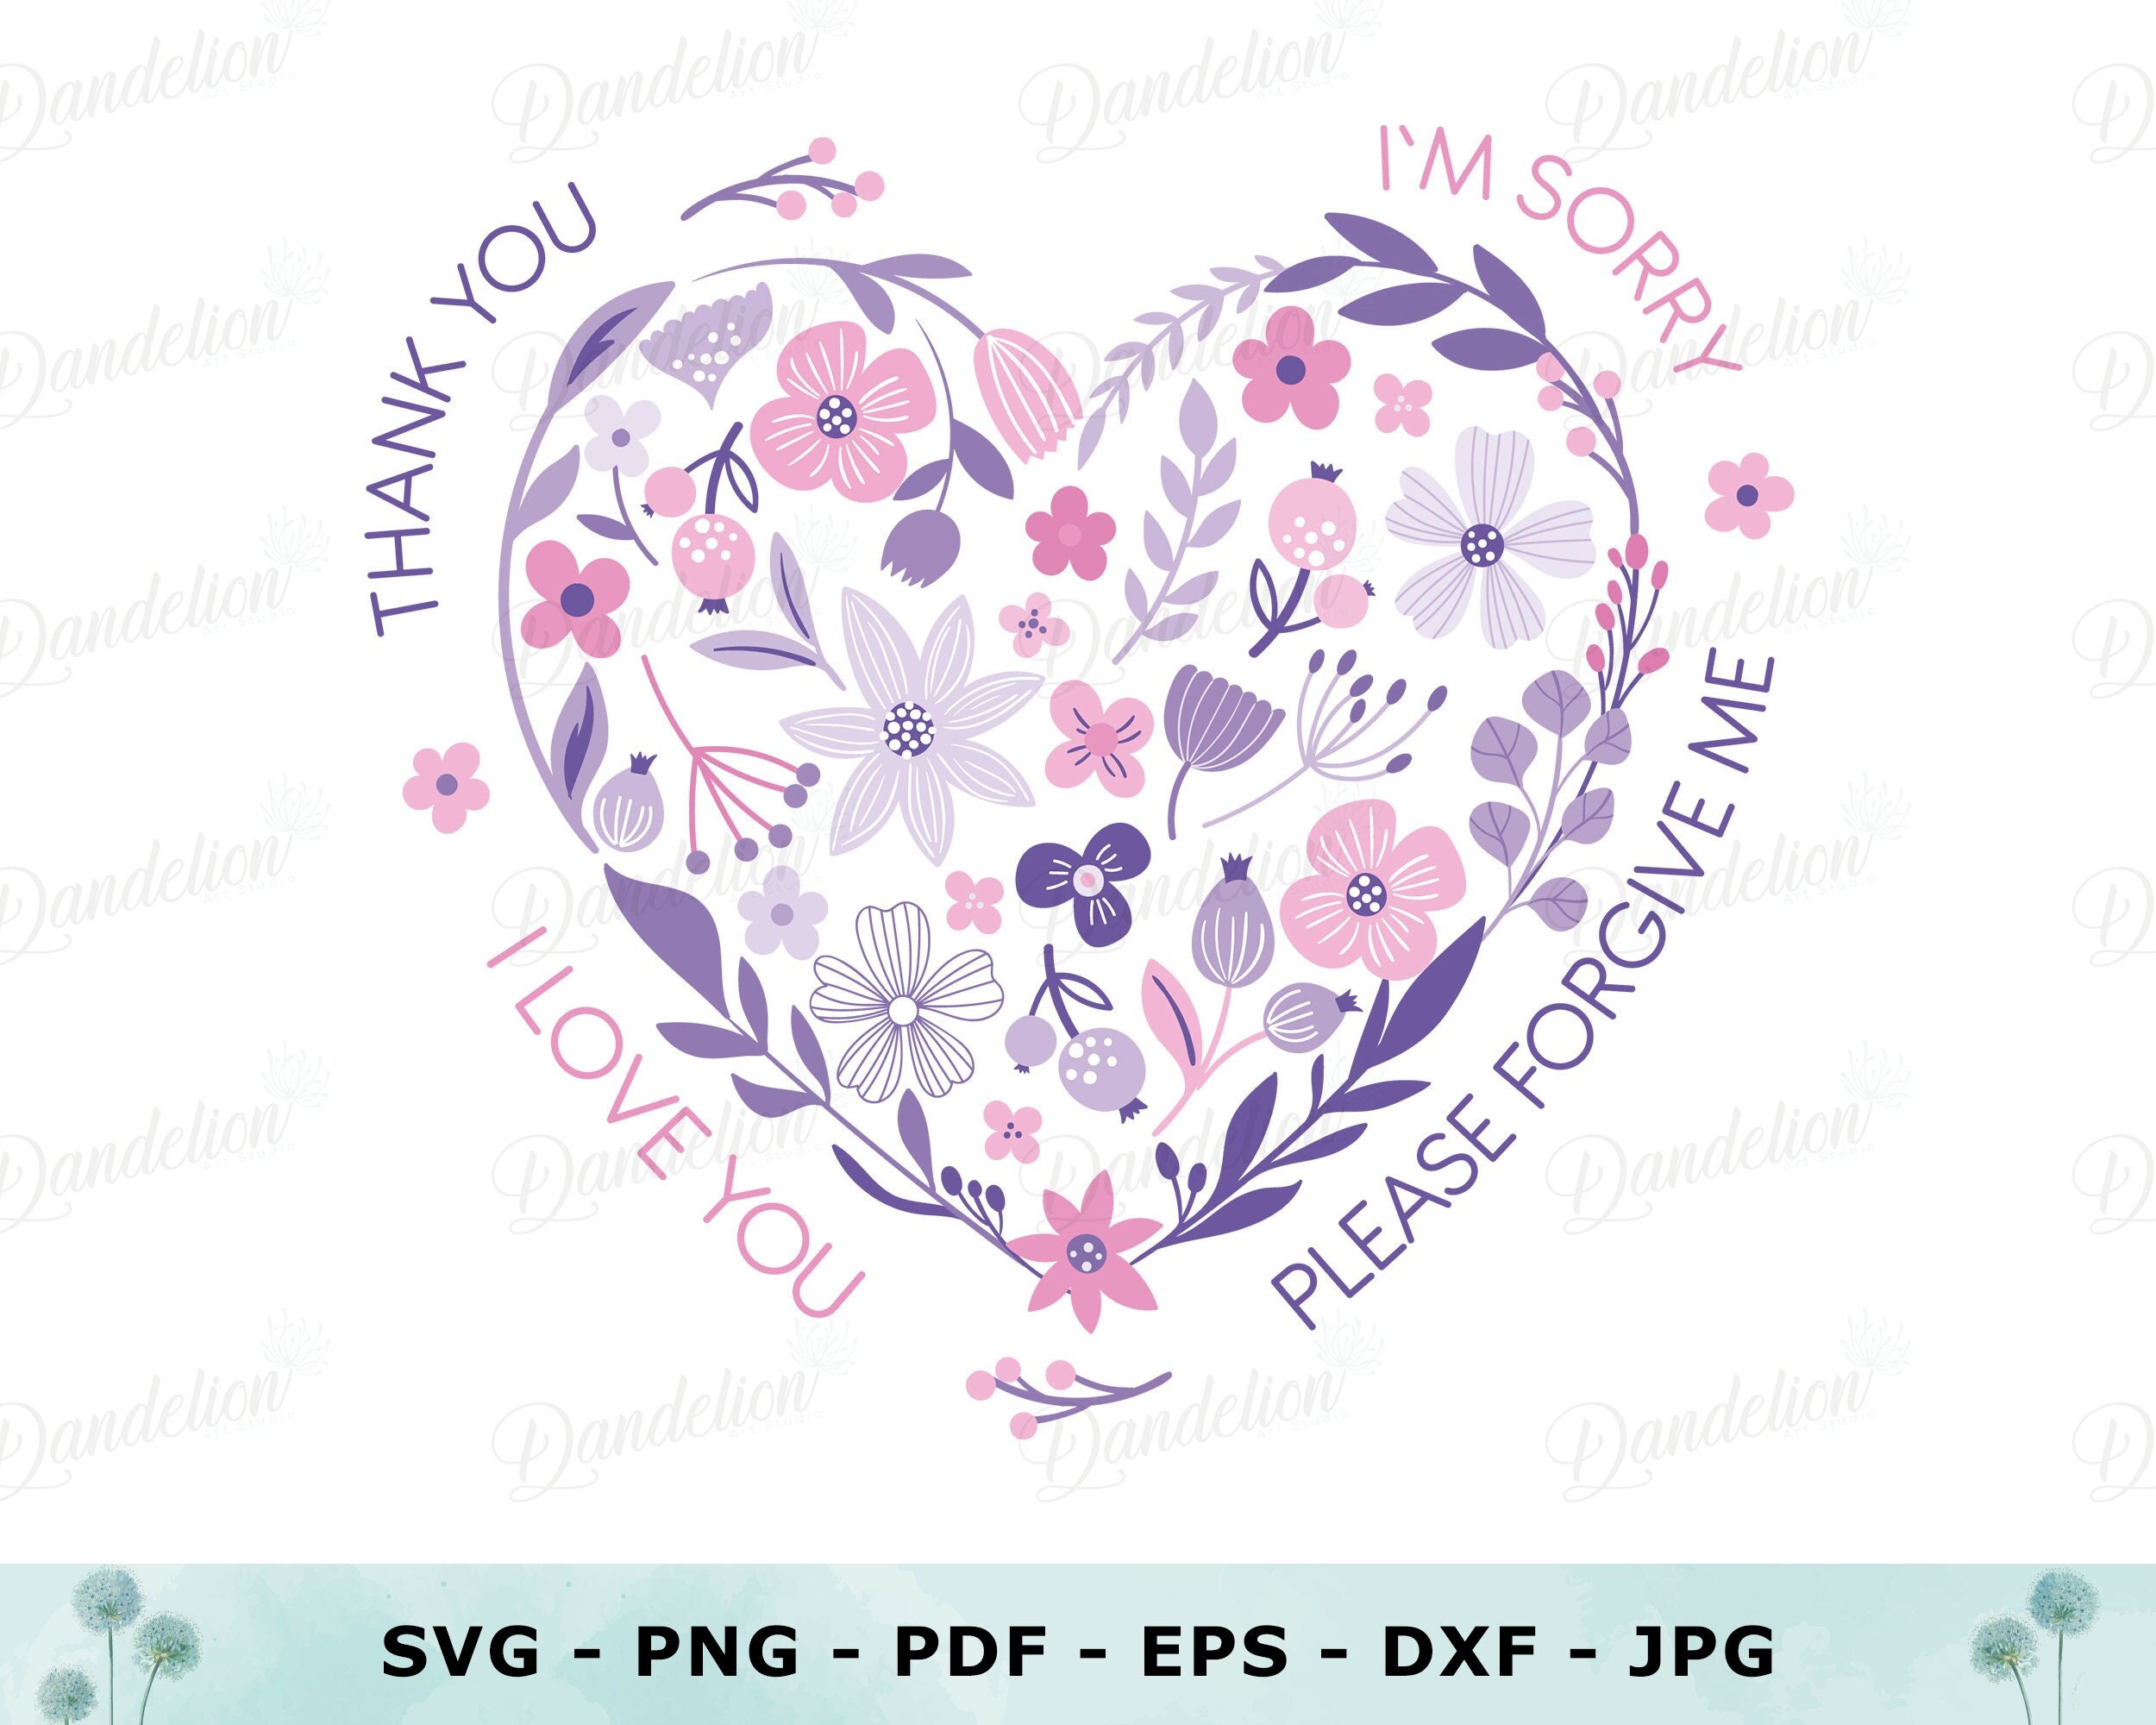 Floral Heart Ho'oponopono -  Printable Tshirts -  Cups -  Bags -  Wall Art -  SVG -  Hoponopono art design -  Heart Meditation -  Instant Download